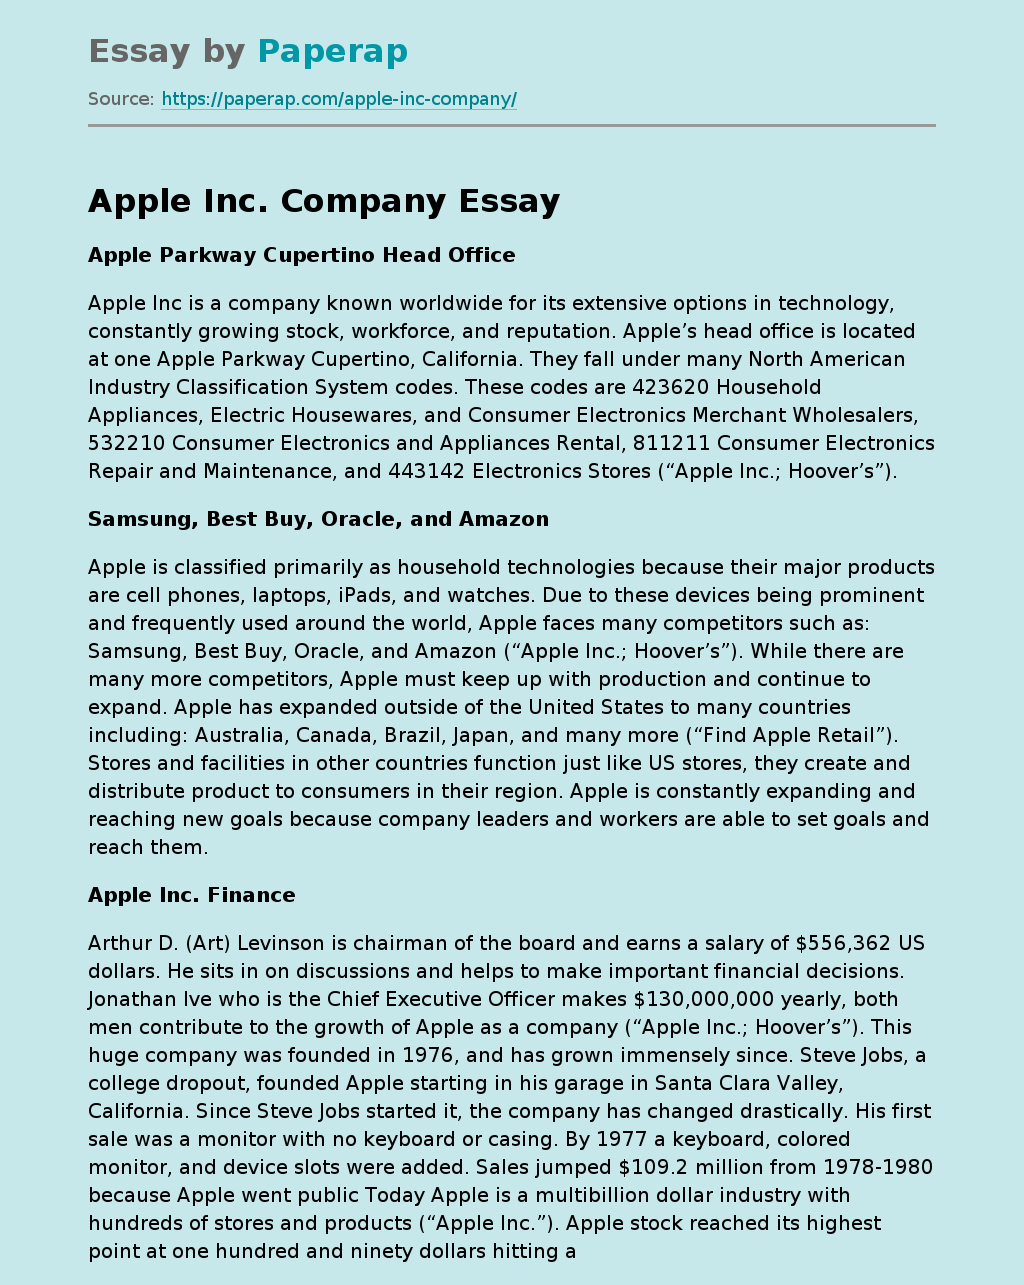 Apple Inc. Company